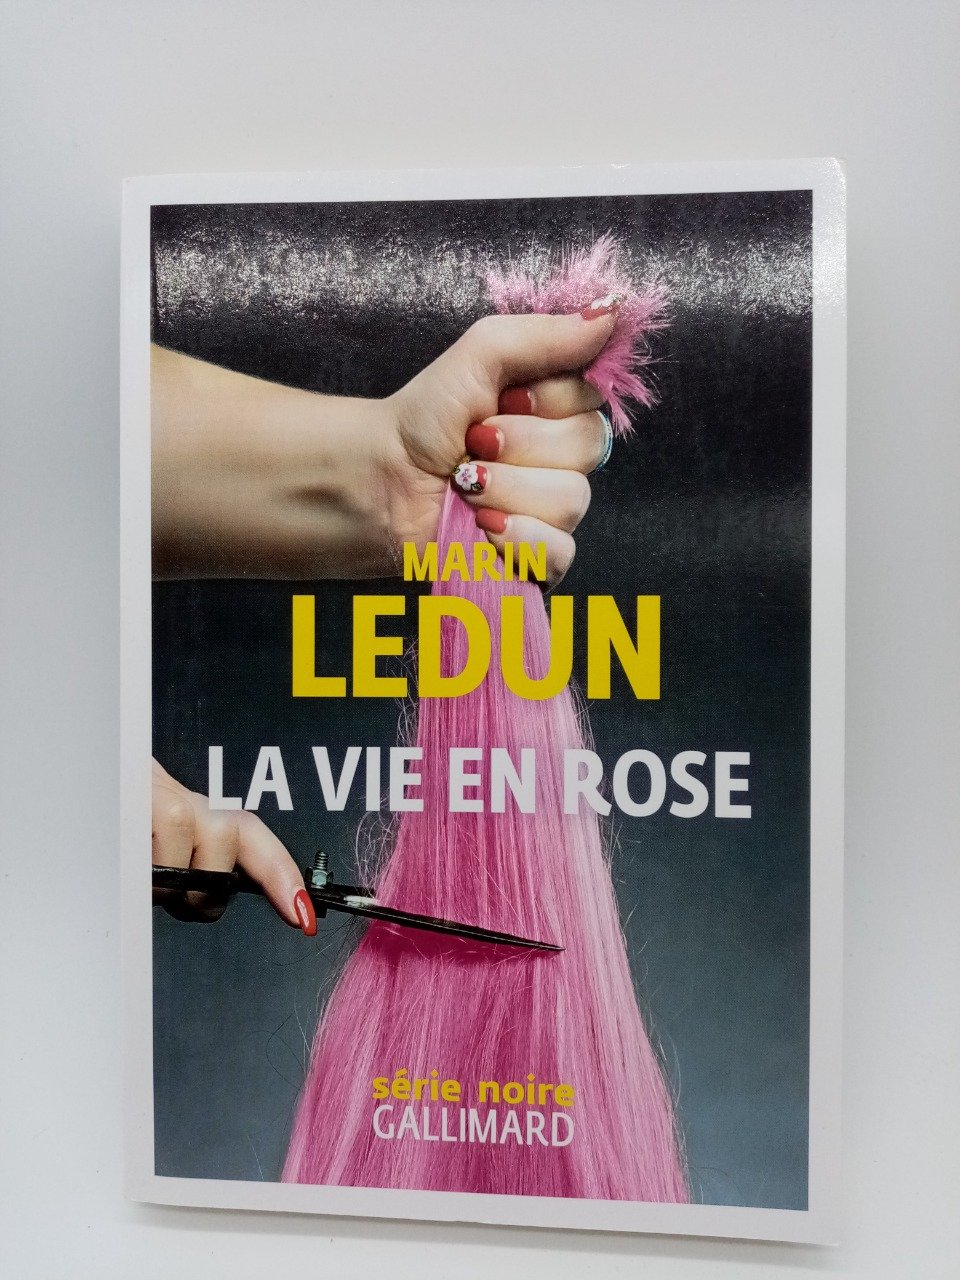 Marie LEDUN, La vie en rose